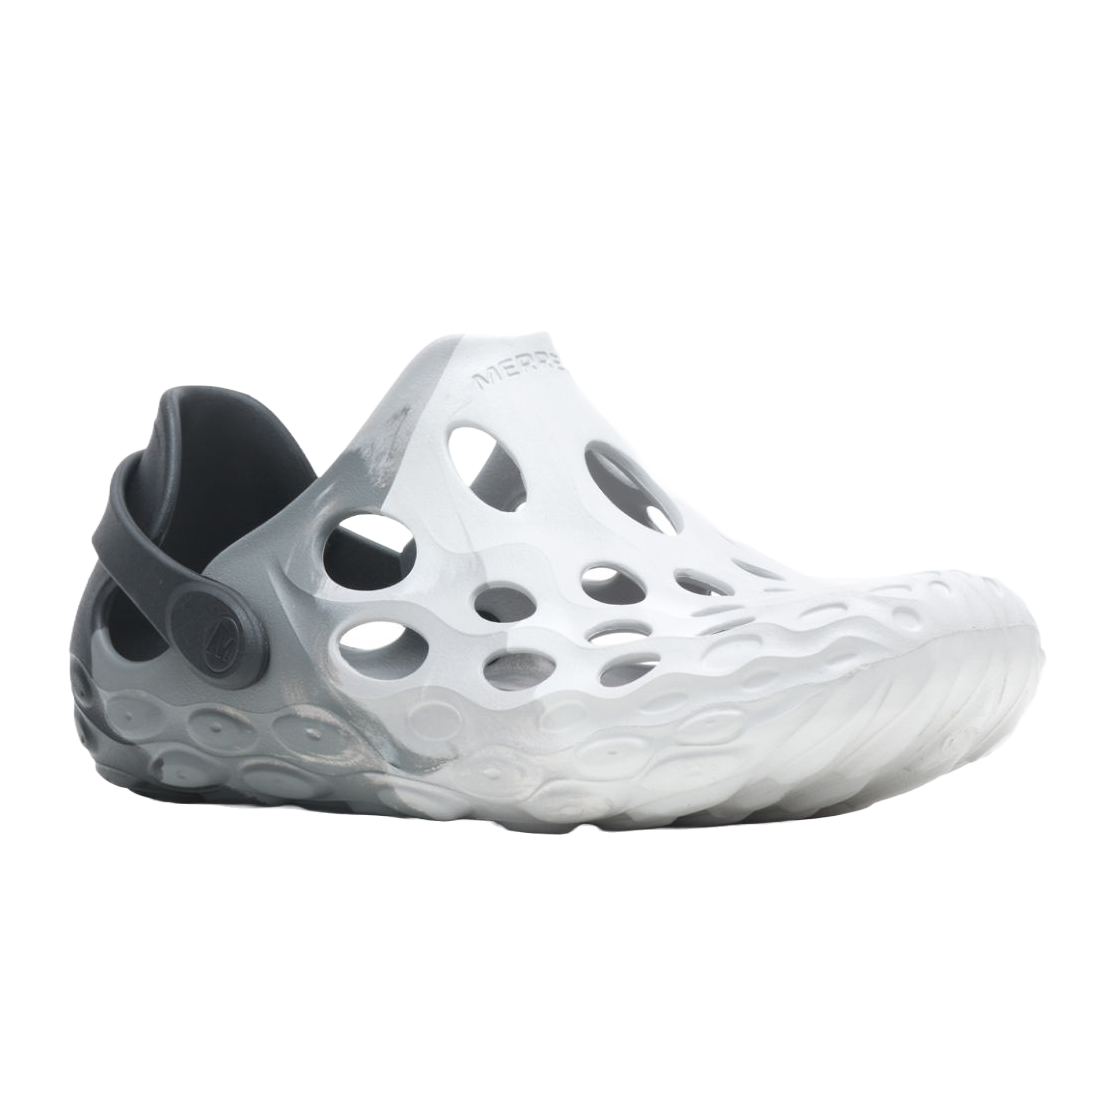 Merrell hydro moc crocs men shoe black grey white